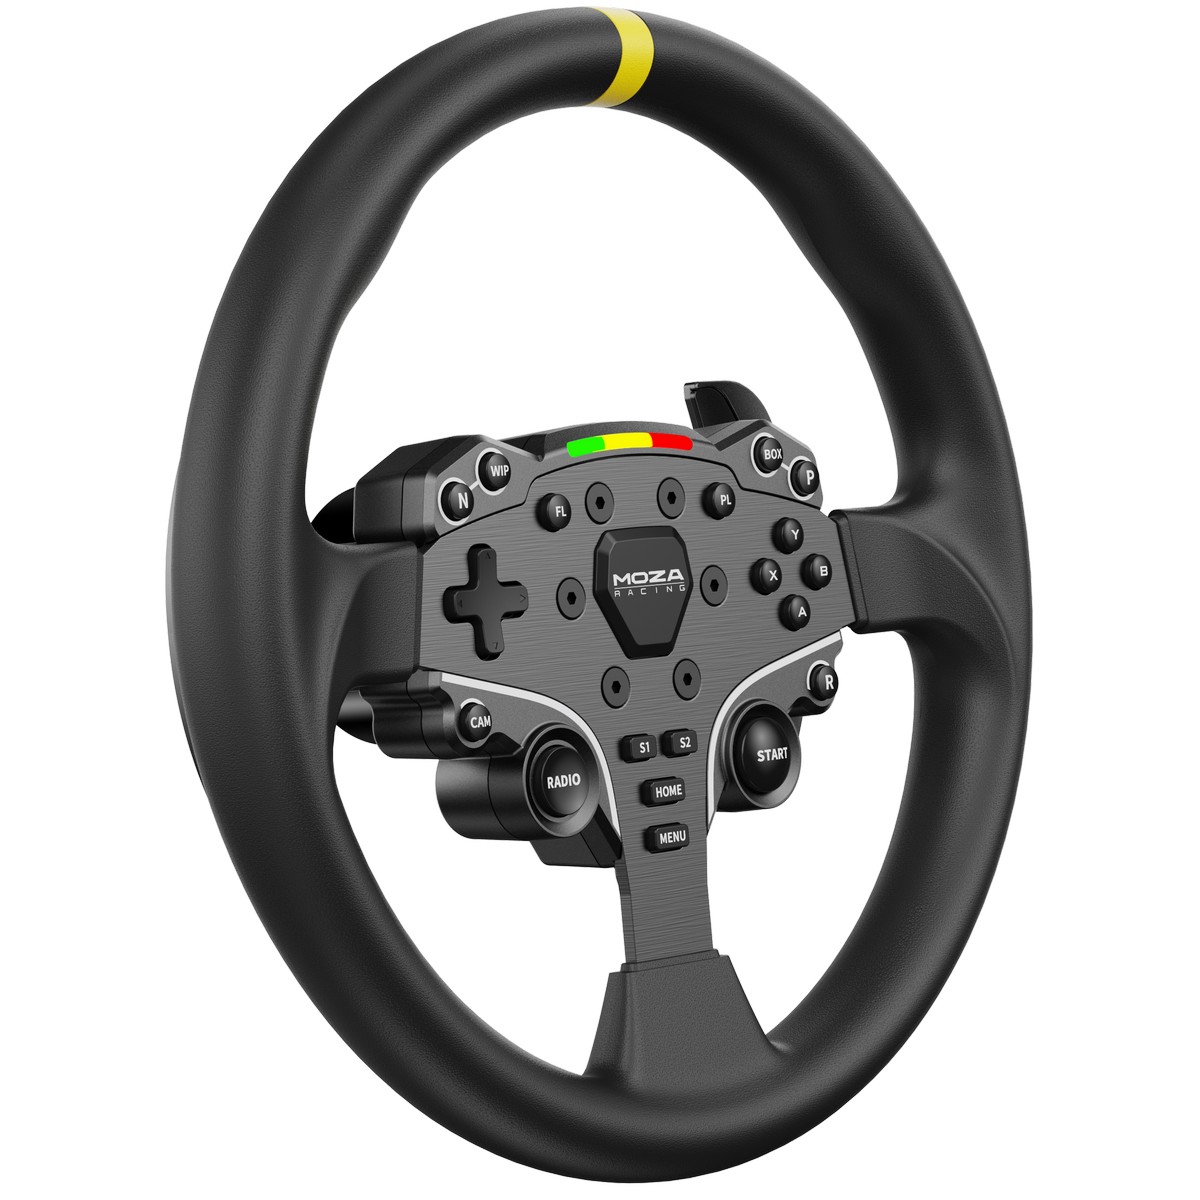 MOZA Racing - MOZA Racing ES 12 inch Steering Wheel Rim For Racing Simulators (RS046)